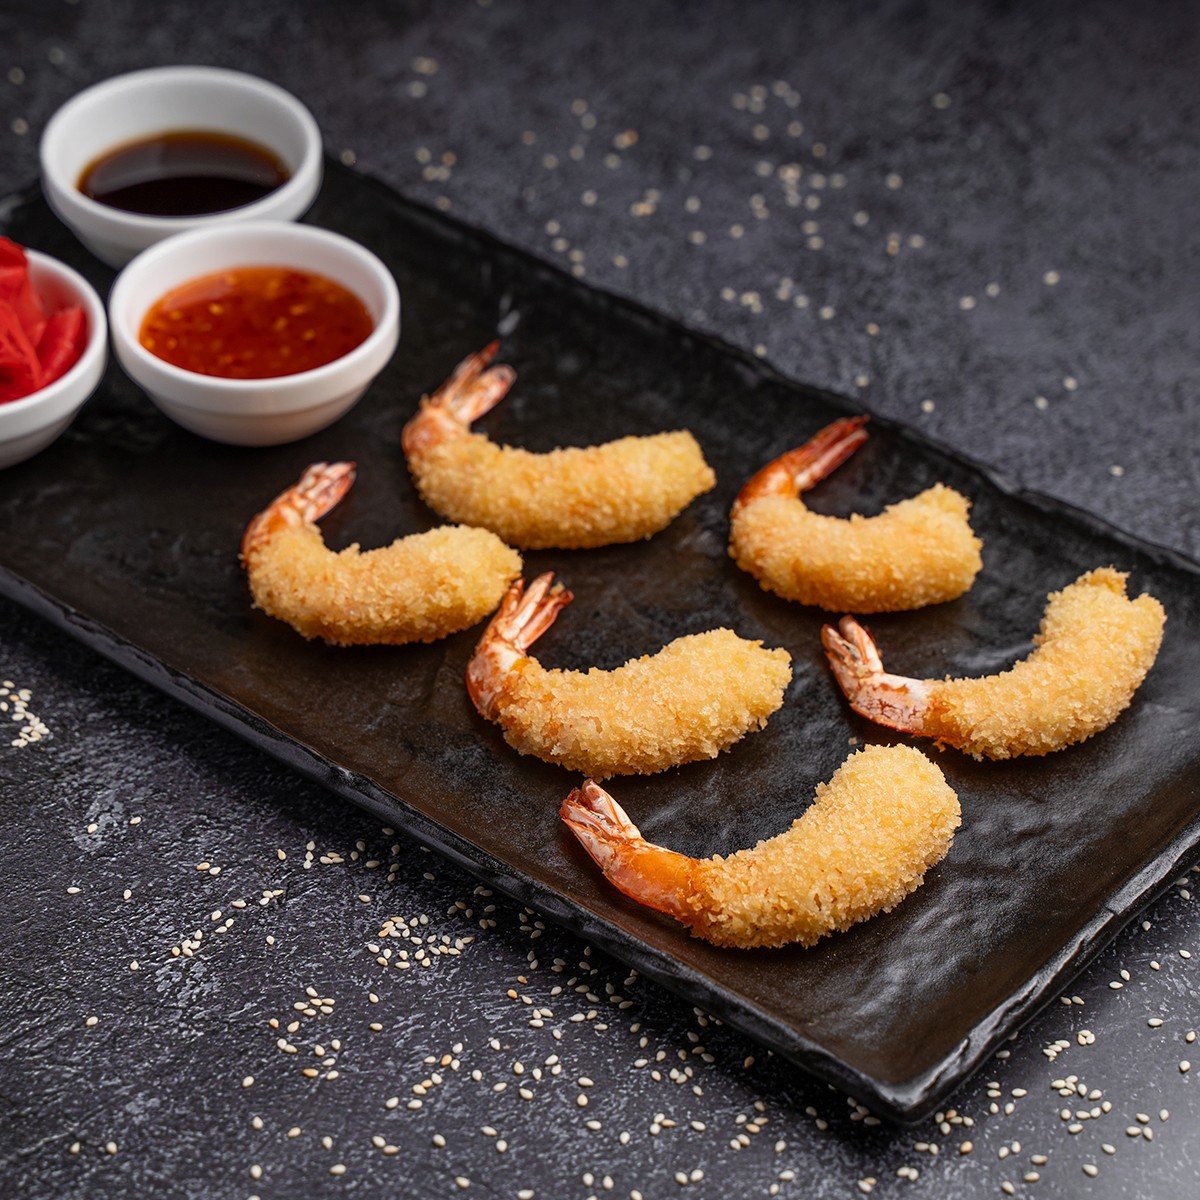 shrimp-tempura